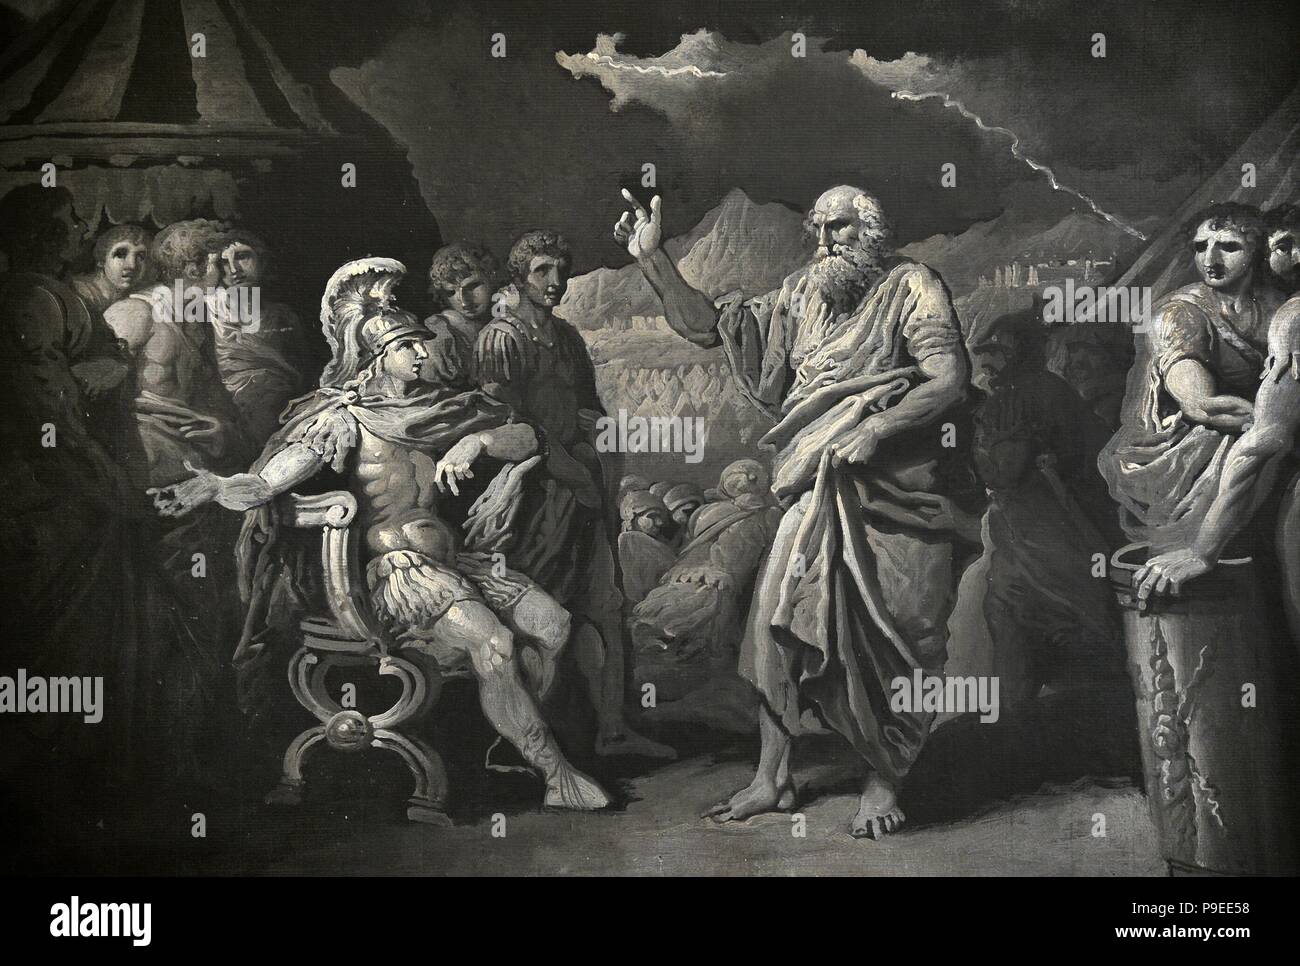 Franciszek Smuglewicz (1745-1807). Polish-Lithuanian painter. Calchas explaining the Reason of Apollo's anger to Achilles. Vilnius Picture Gallery. Stock Photo